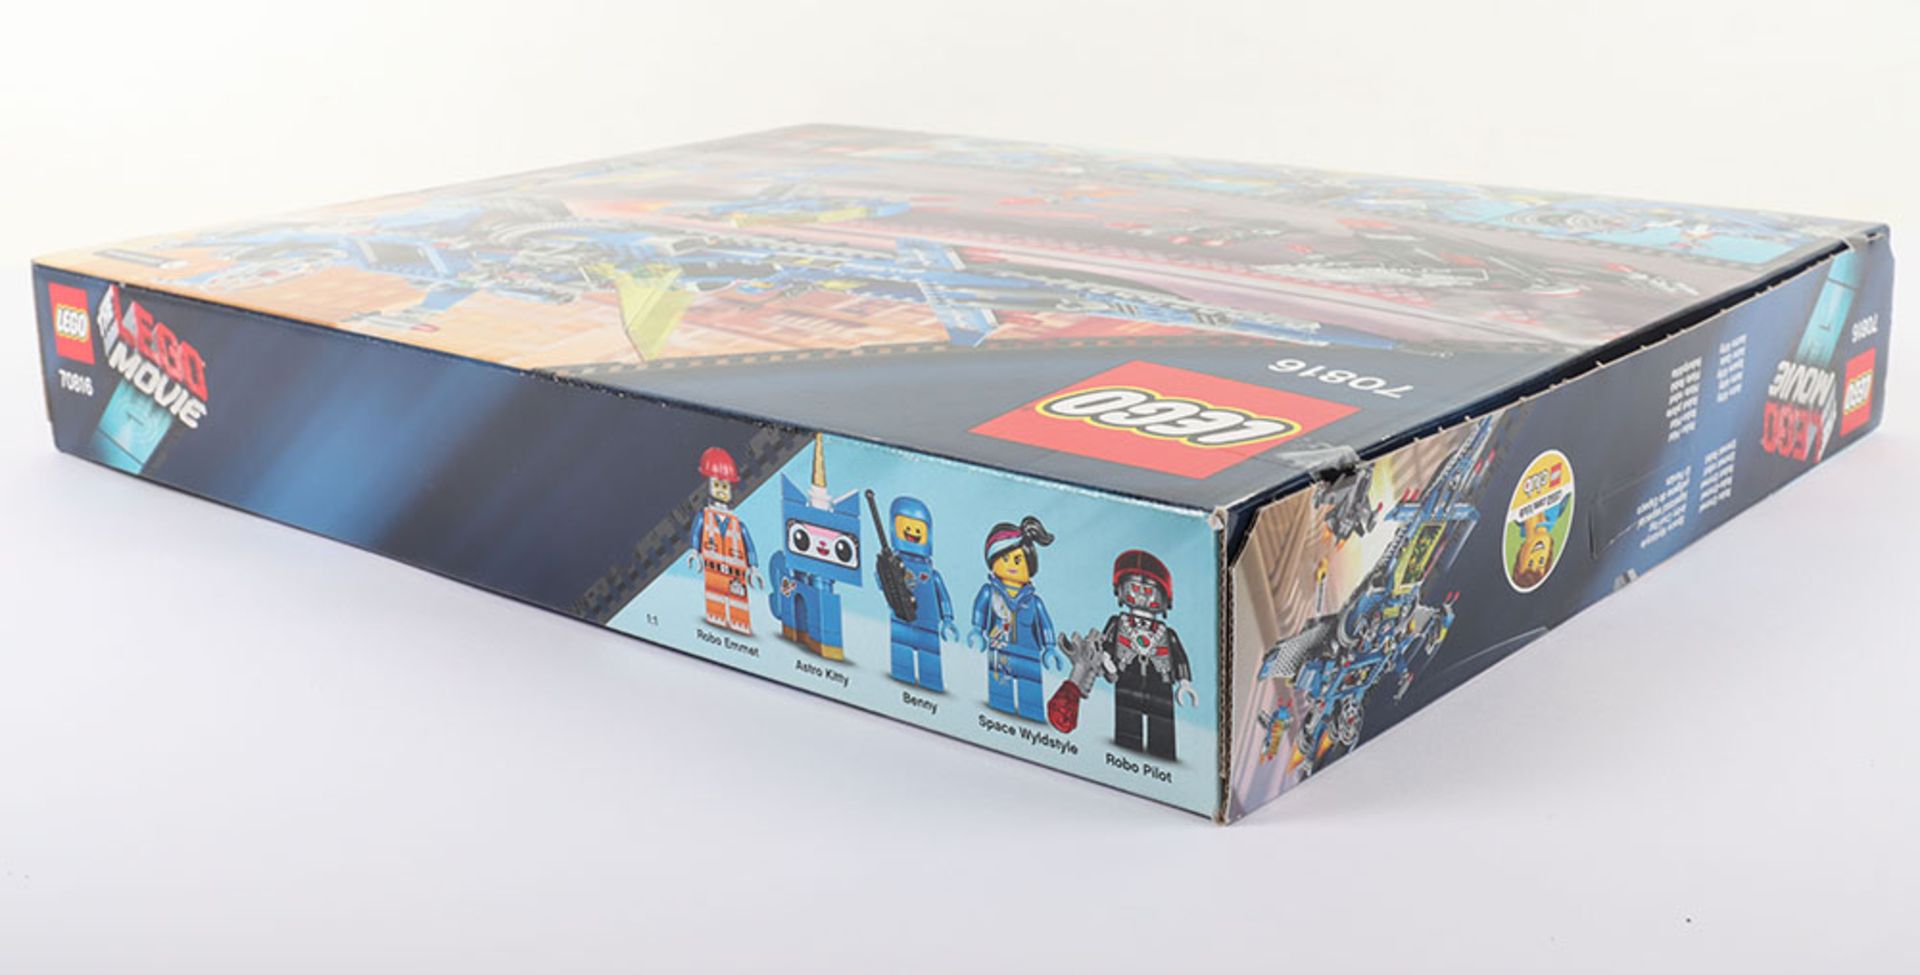 Lego “The Lego Movie” 70816 Benny's Spaceship, Spaceship, SPACESHIP! Sealed boxed - Image 4 of 8